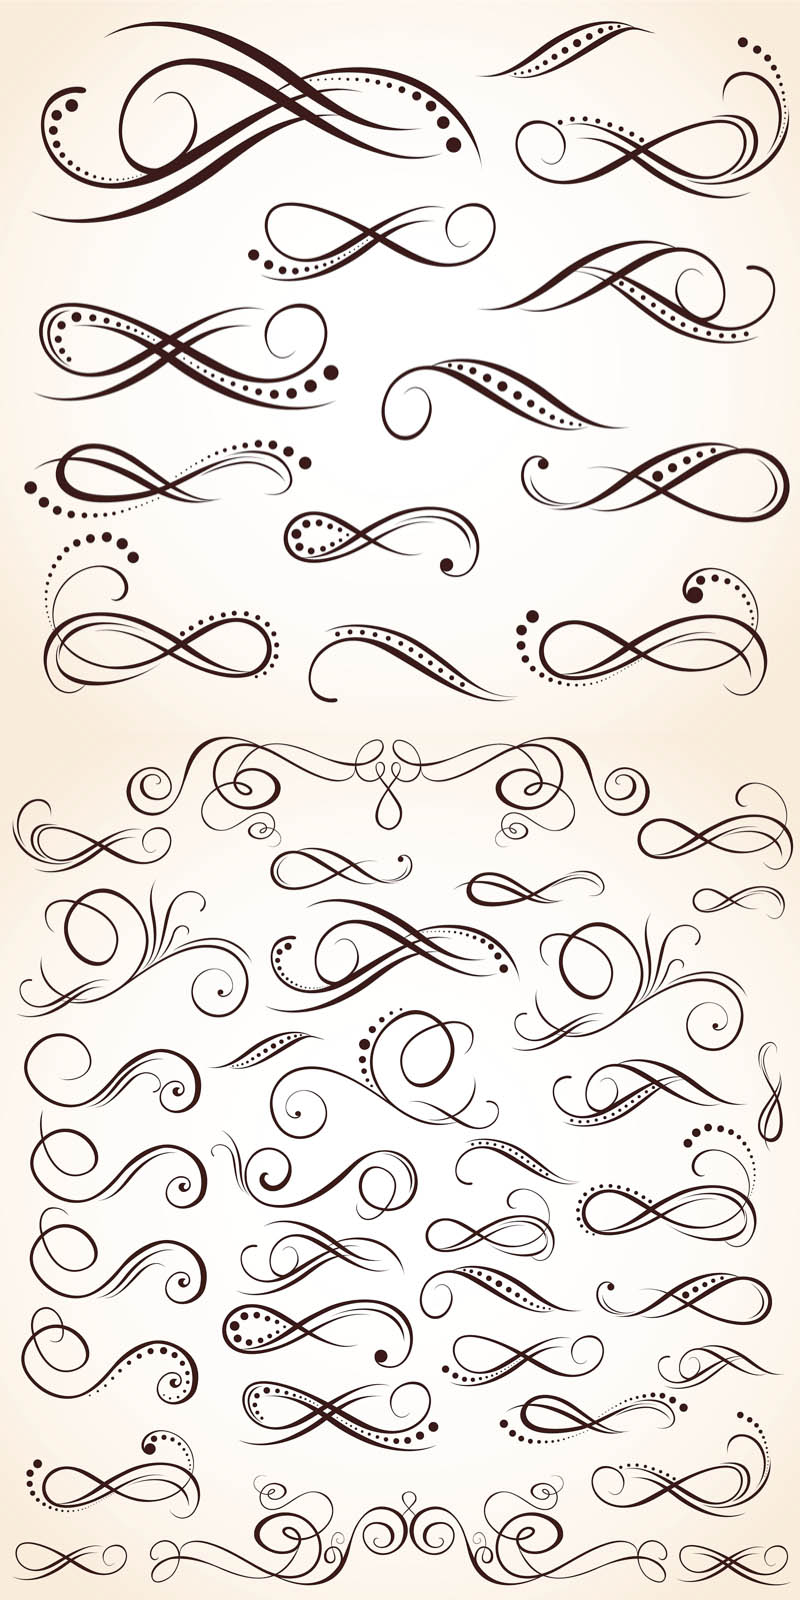 14 Free Vector Ornate Swirls Images